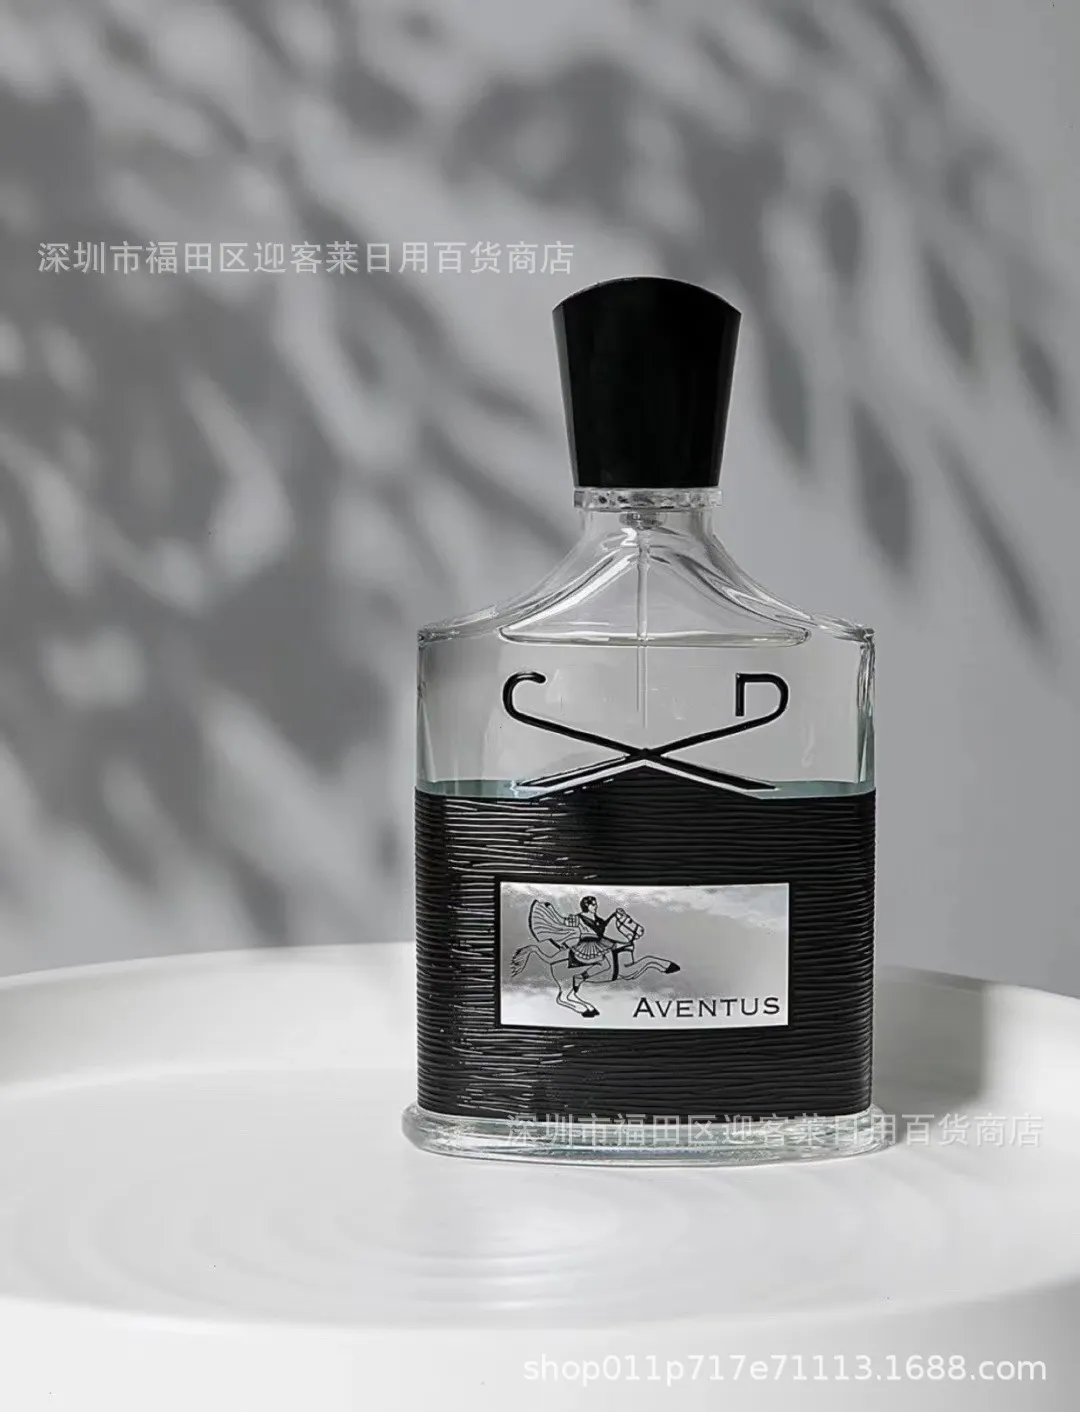 Morgen Festes Parfüm pro 4 -Pieces für Männer 120 ml Himalaya Imperial Mellisime Eau de Parfum gute Qualität Hochduftkapaktitätskölne